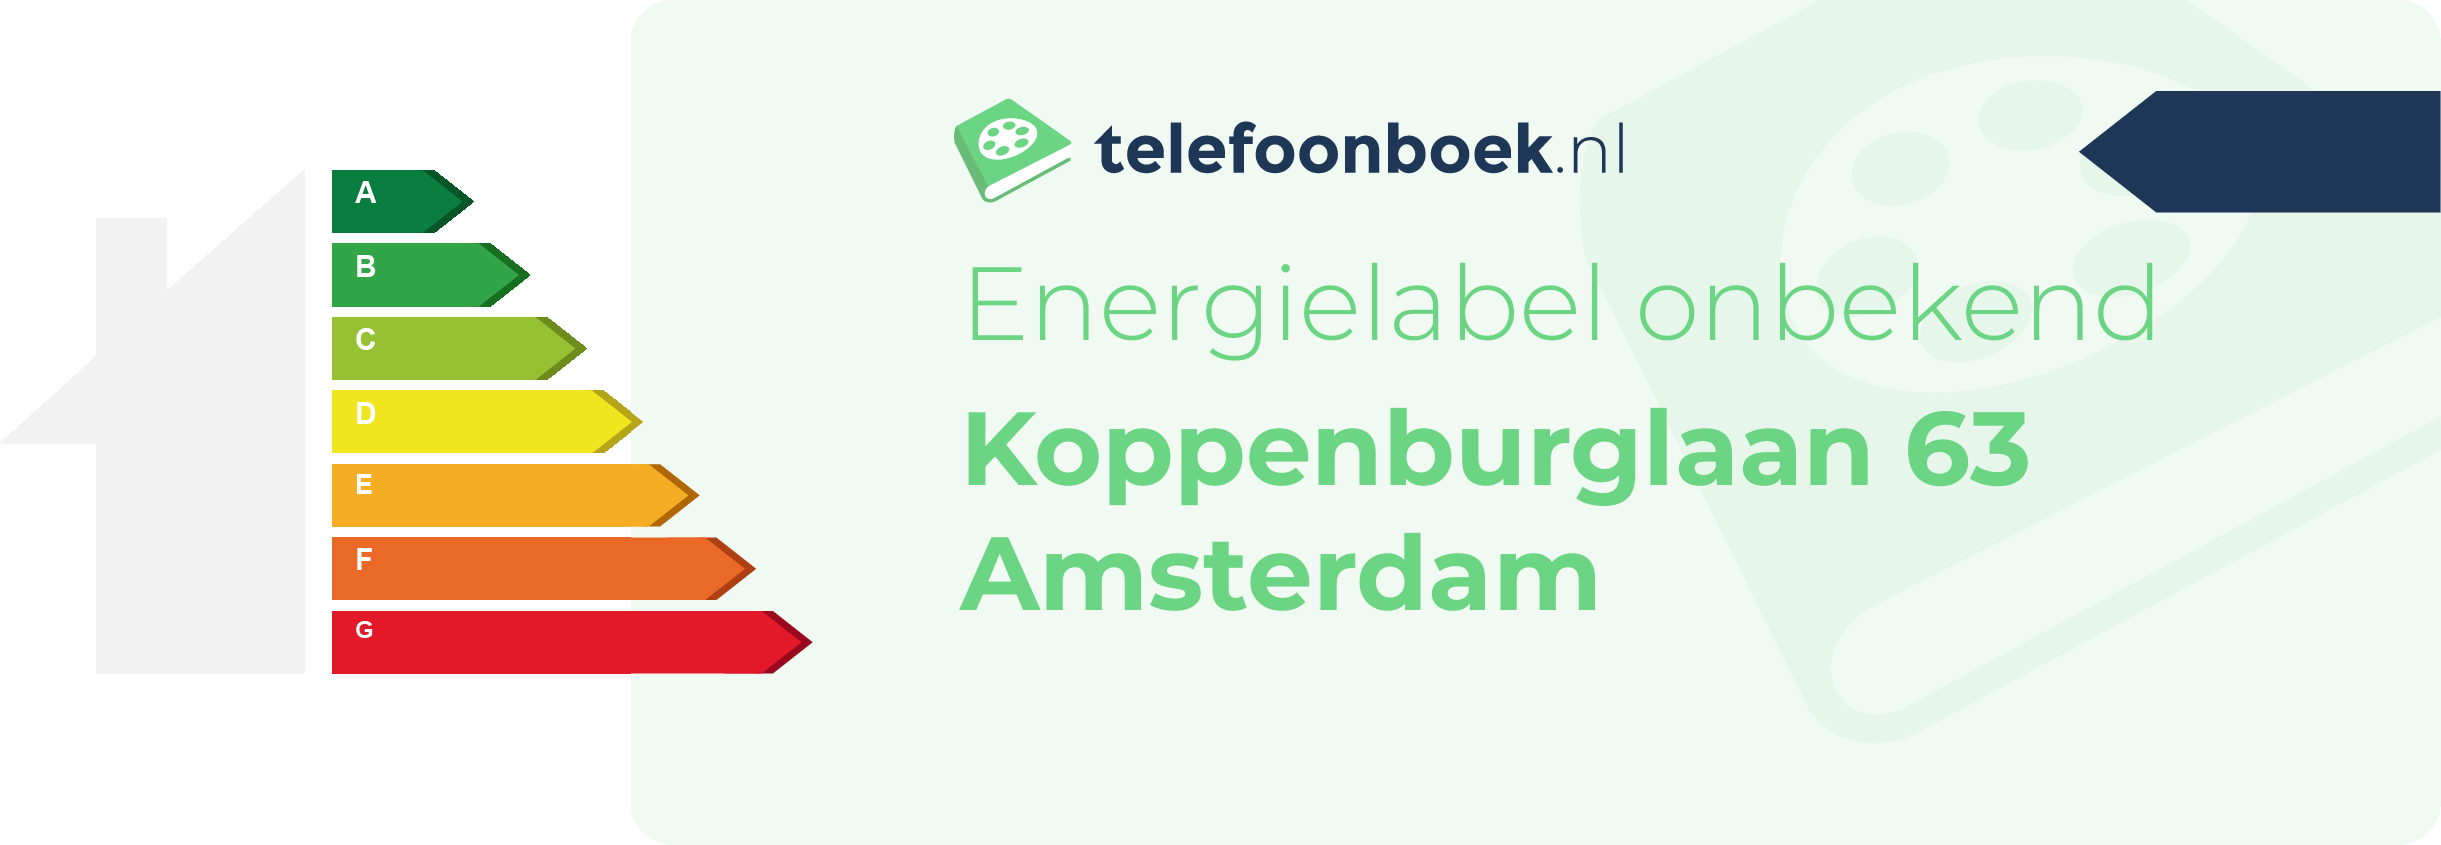 Energielabel Koppenburglaan 63 Amsterdam